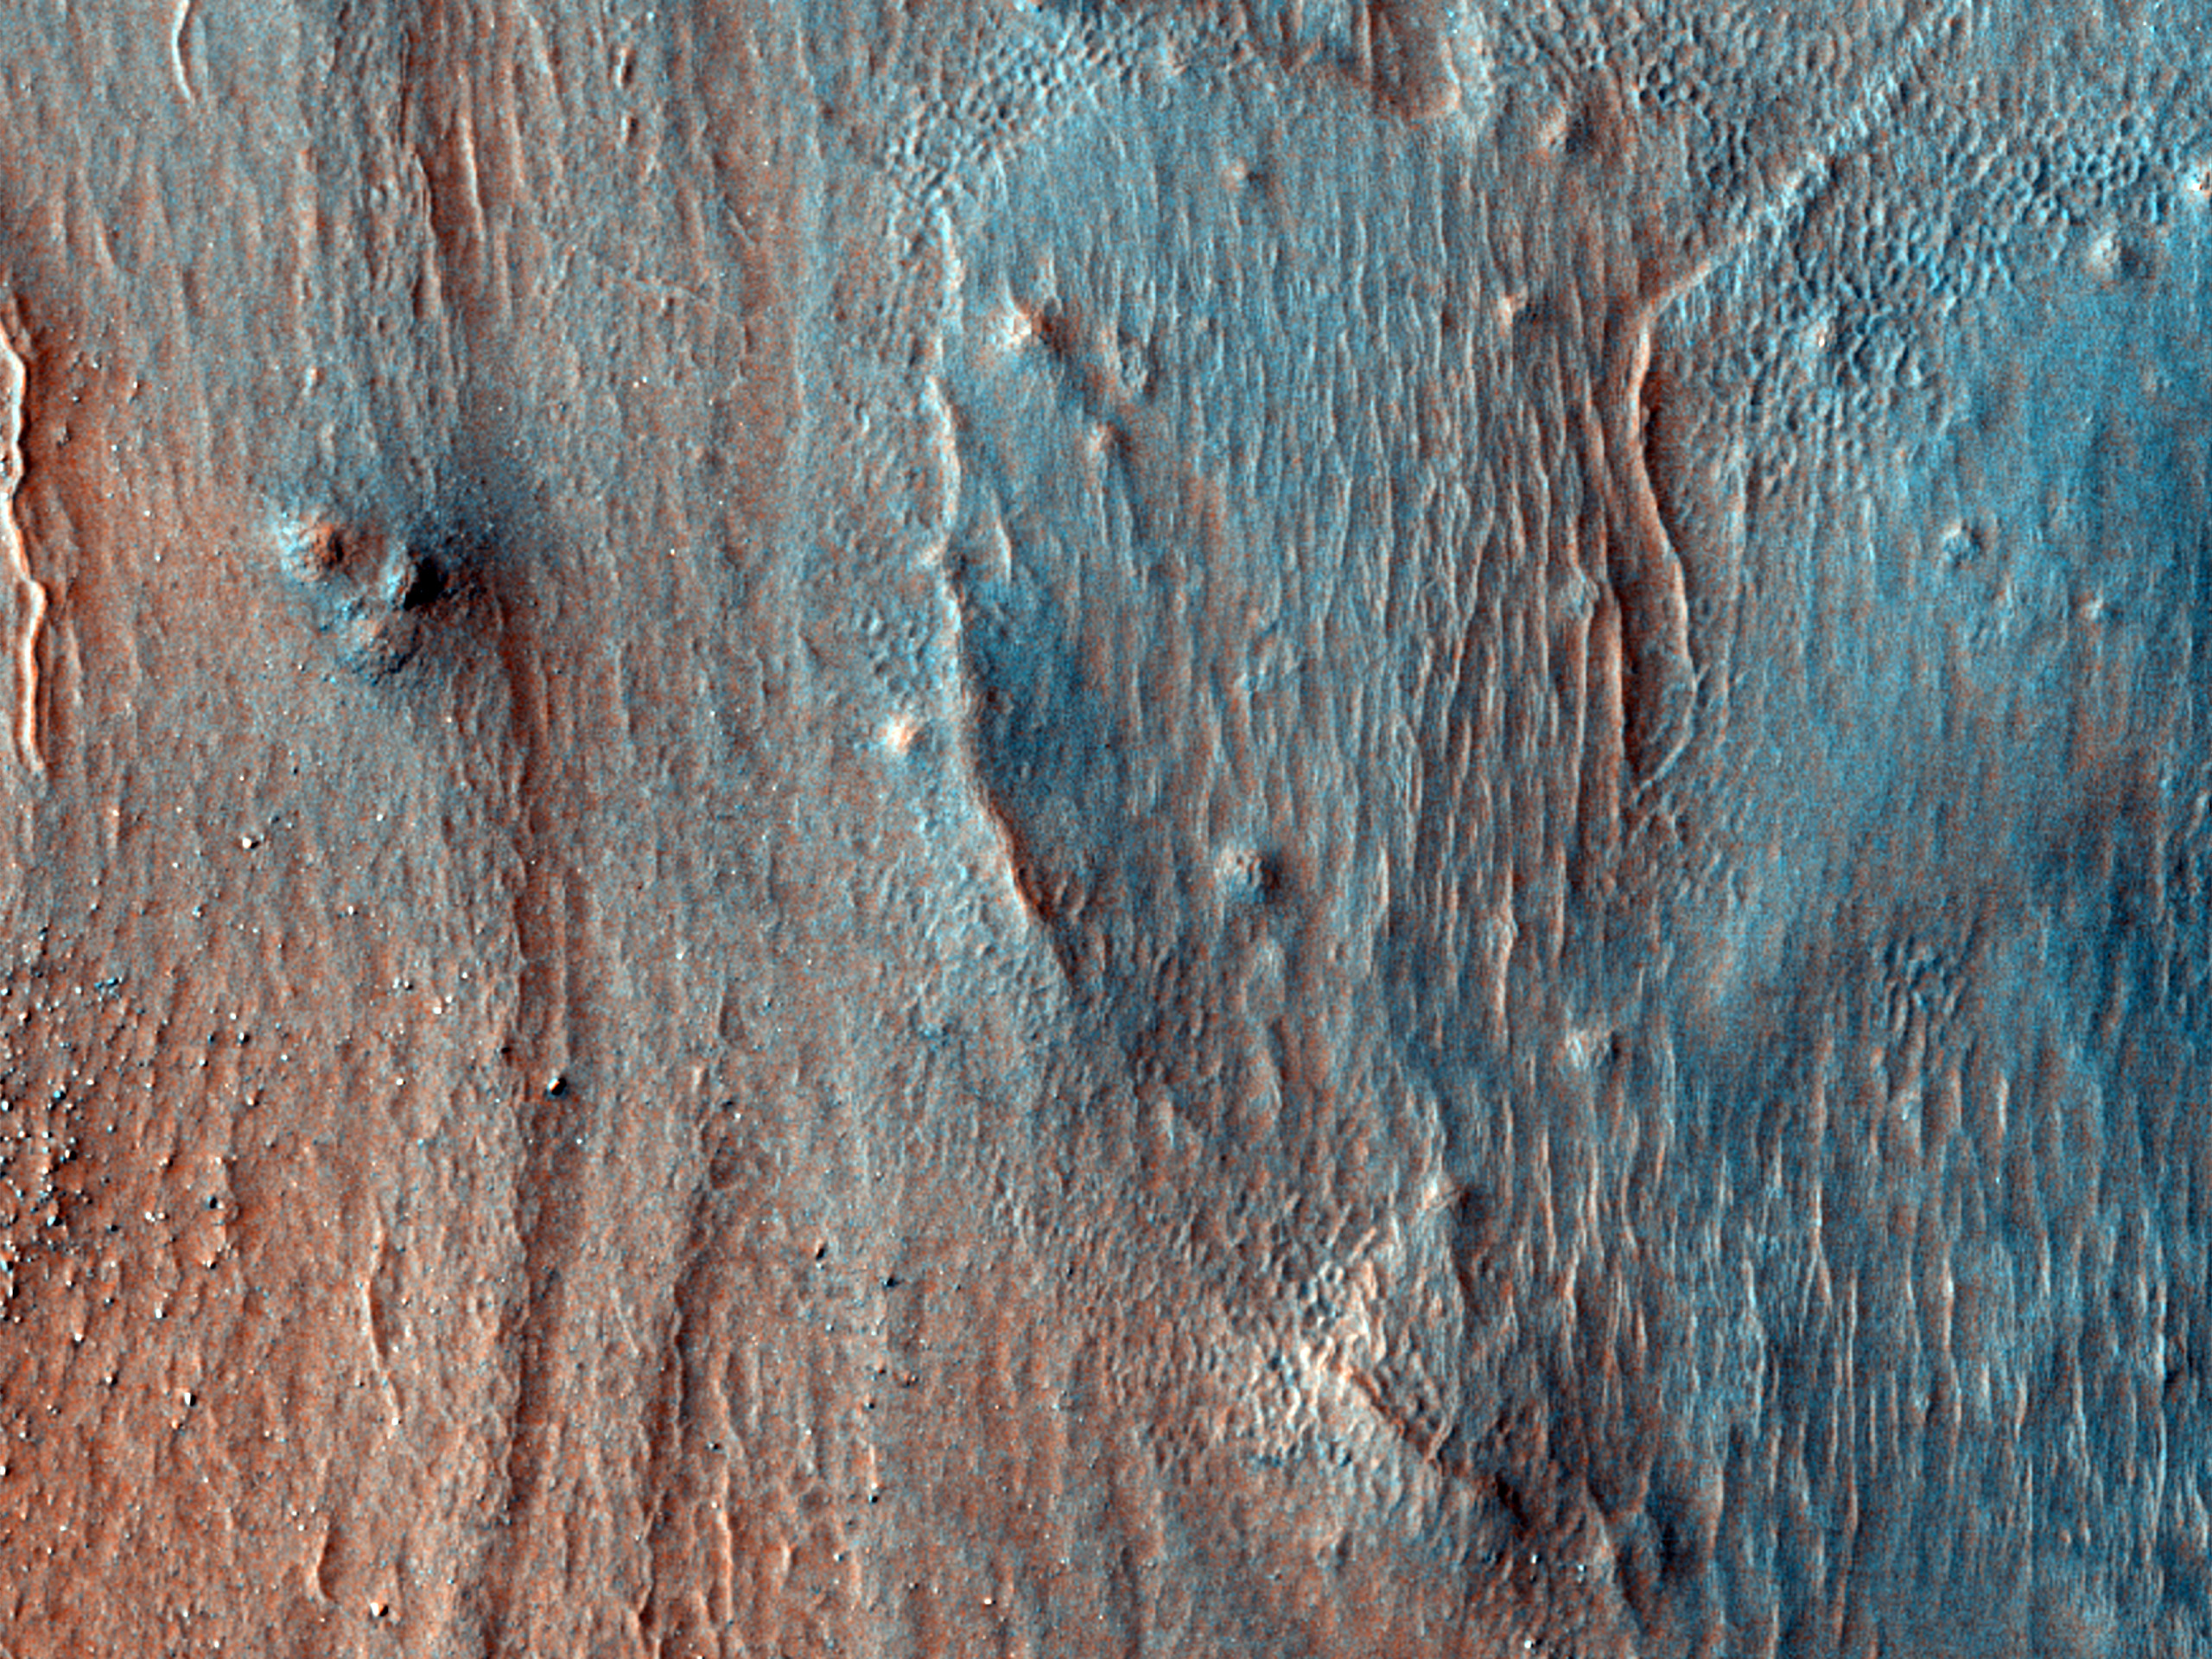 Rectilinear Ridges near Ice-Rich Material in Nereidum Montes